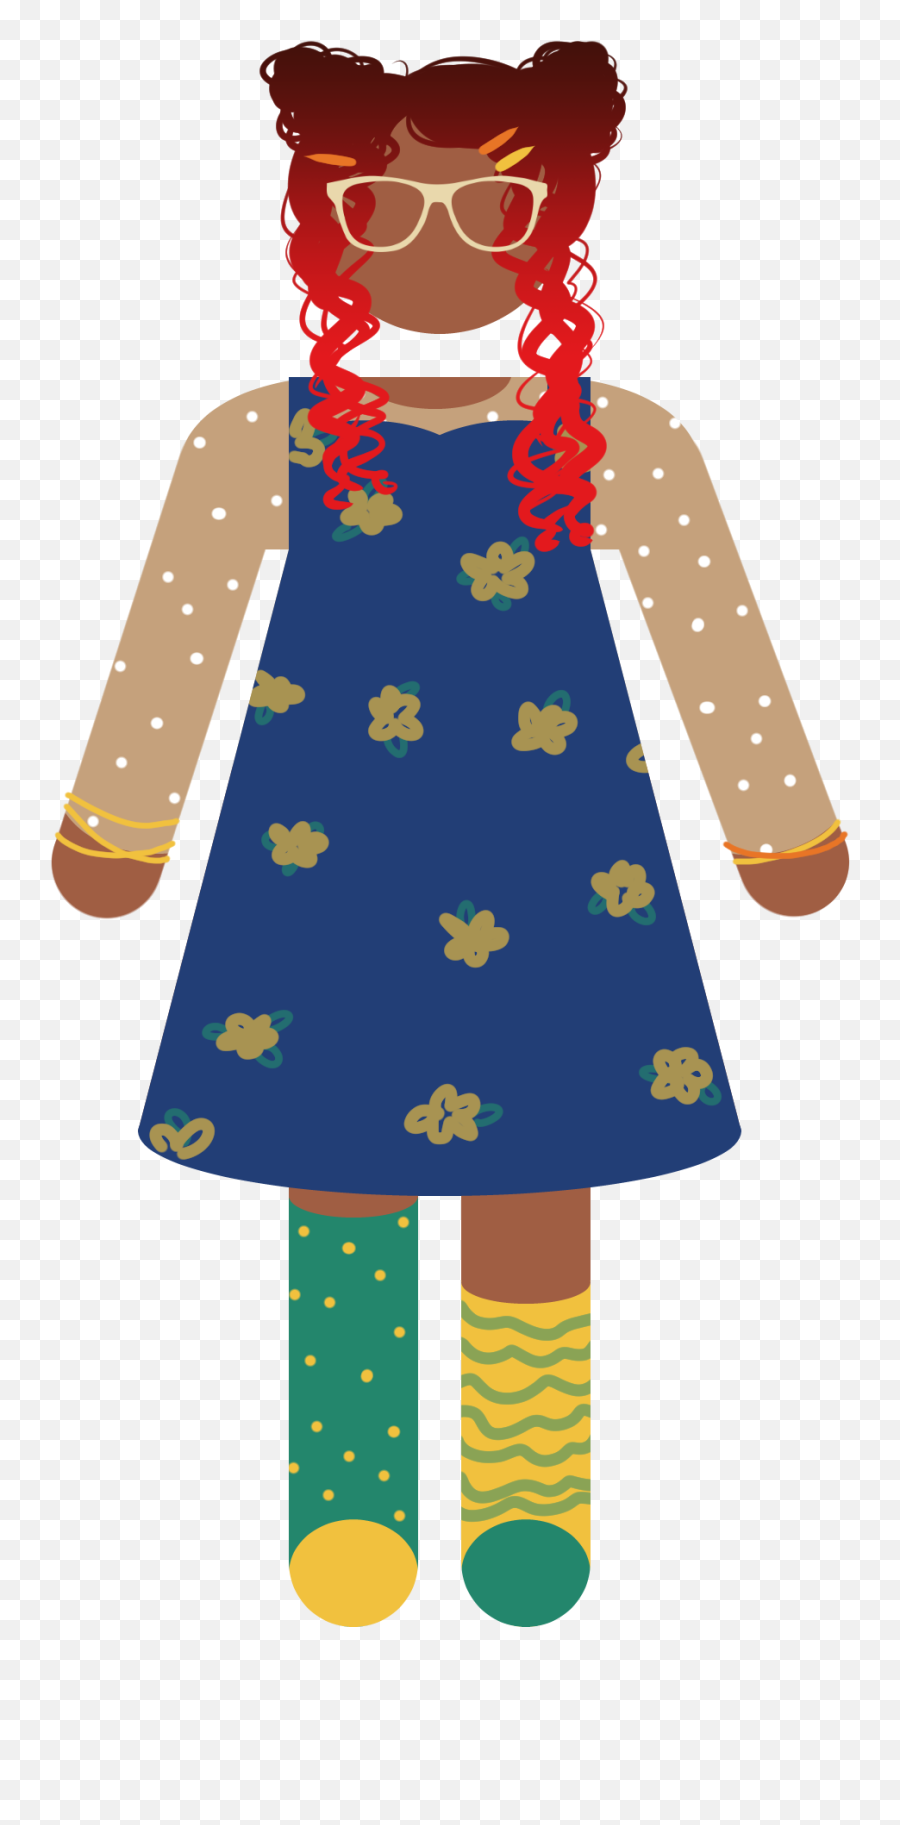 Filecute Stpd Iconpng - Wikimedia Commons Basic Dress,Cute Settings Icon